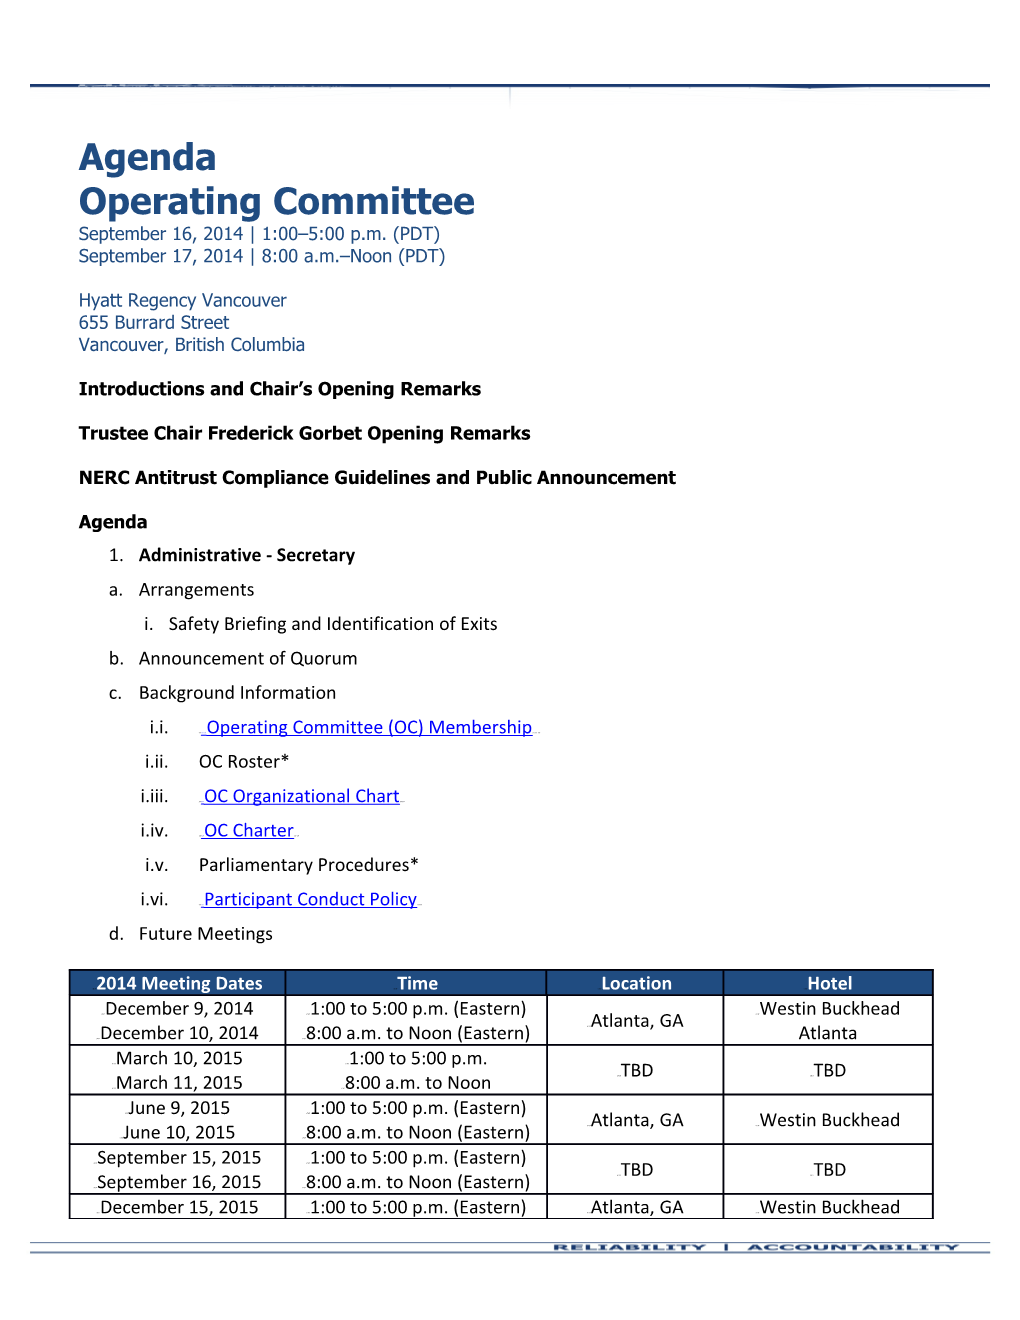 OC Meeting Agenda - September 16-17, 2014 (Vancouver BC)